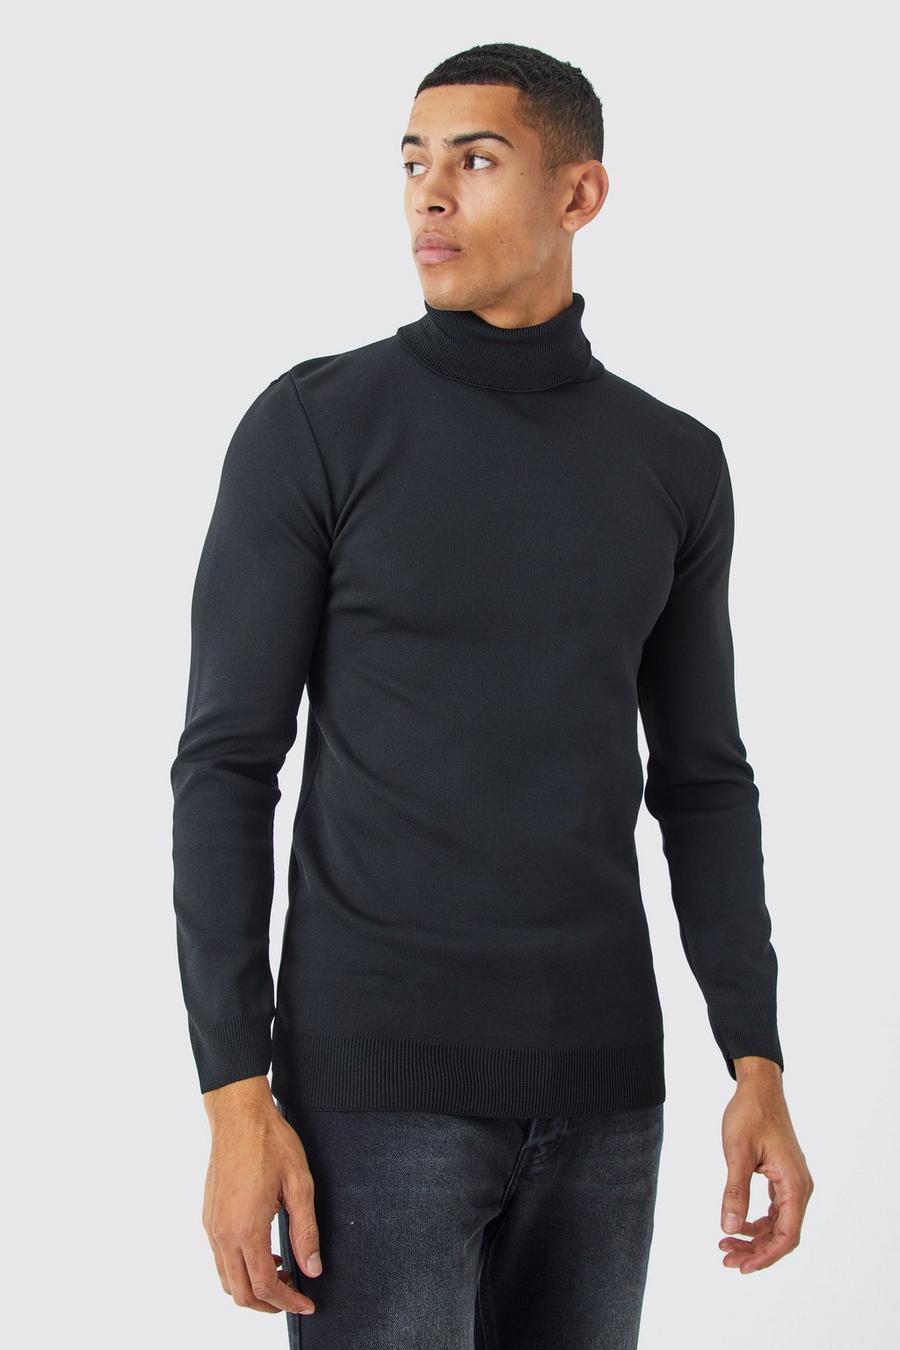 Black Muscle Turtleneck Sweater